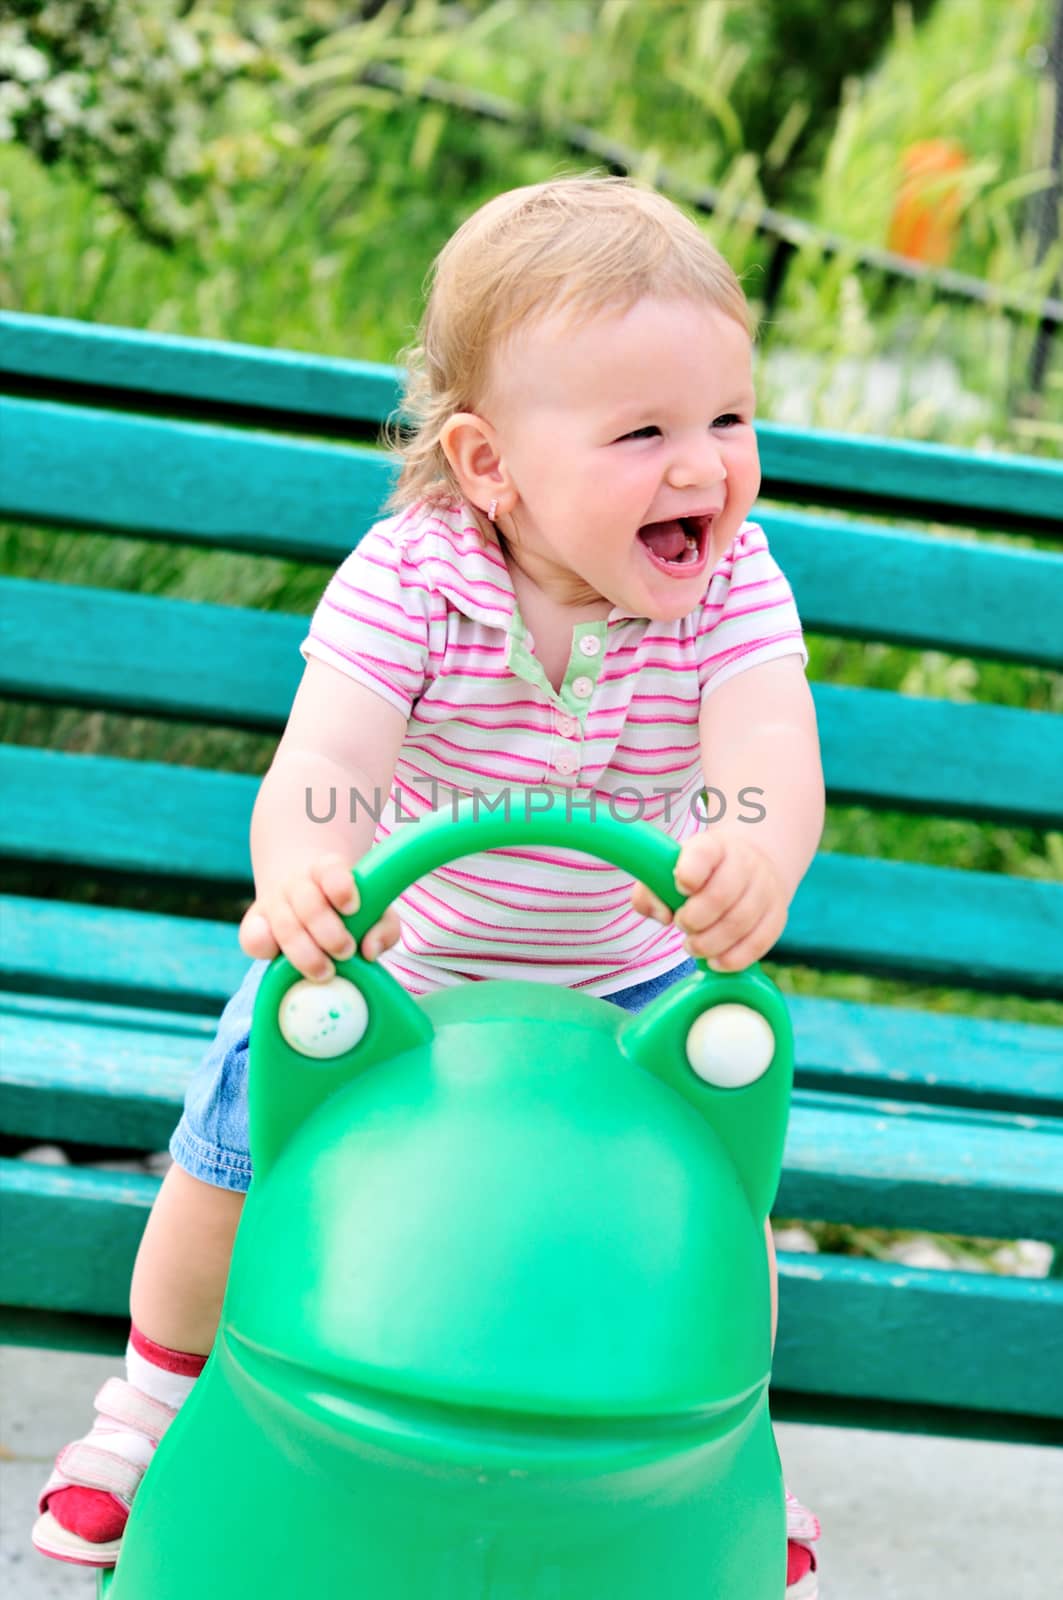 Small funny girl girl on spring frog swing